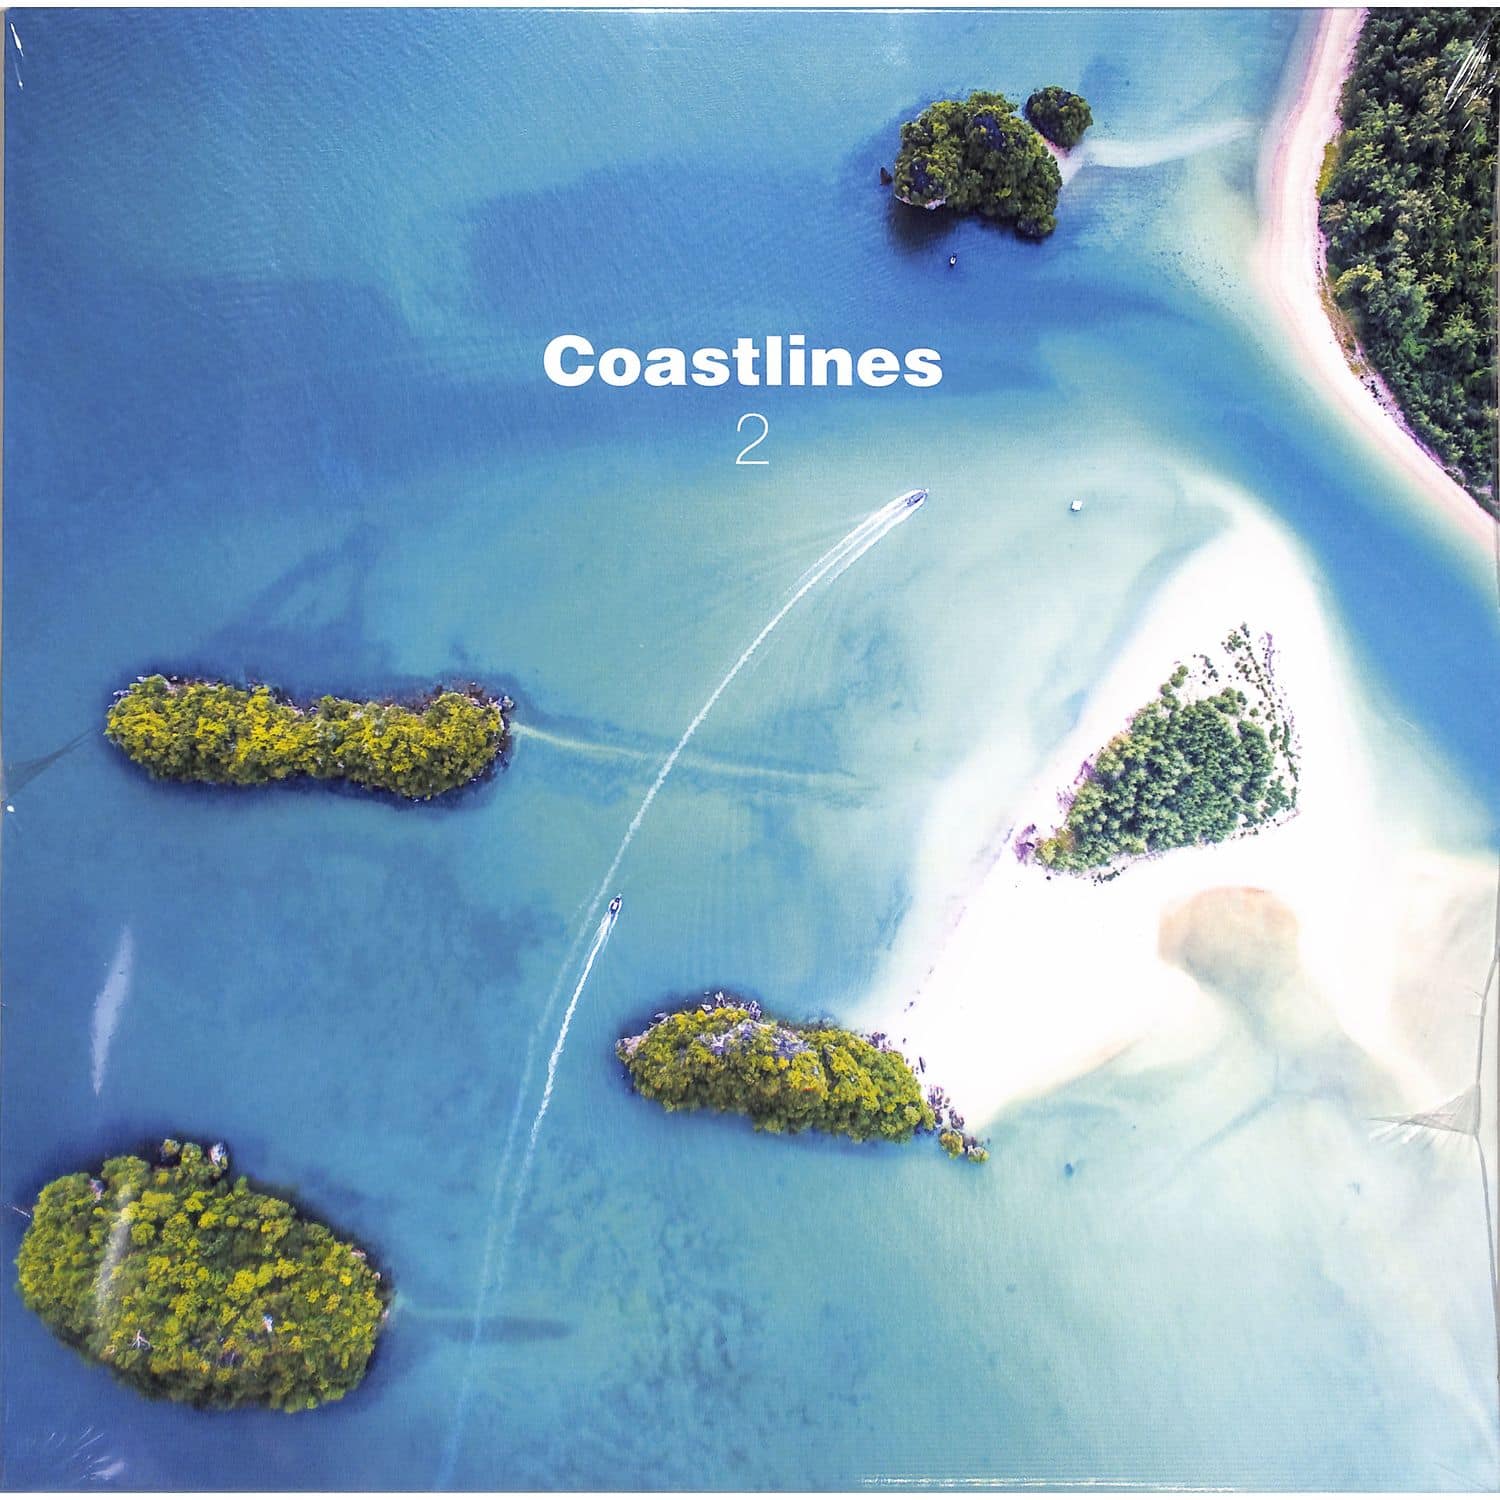 Coastlines - COASTLINES 2 